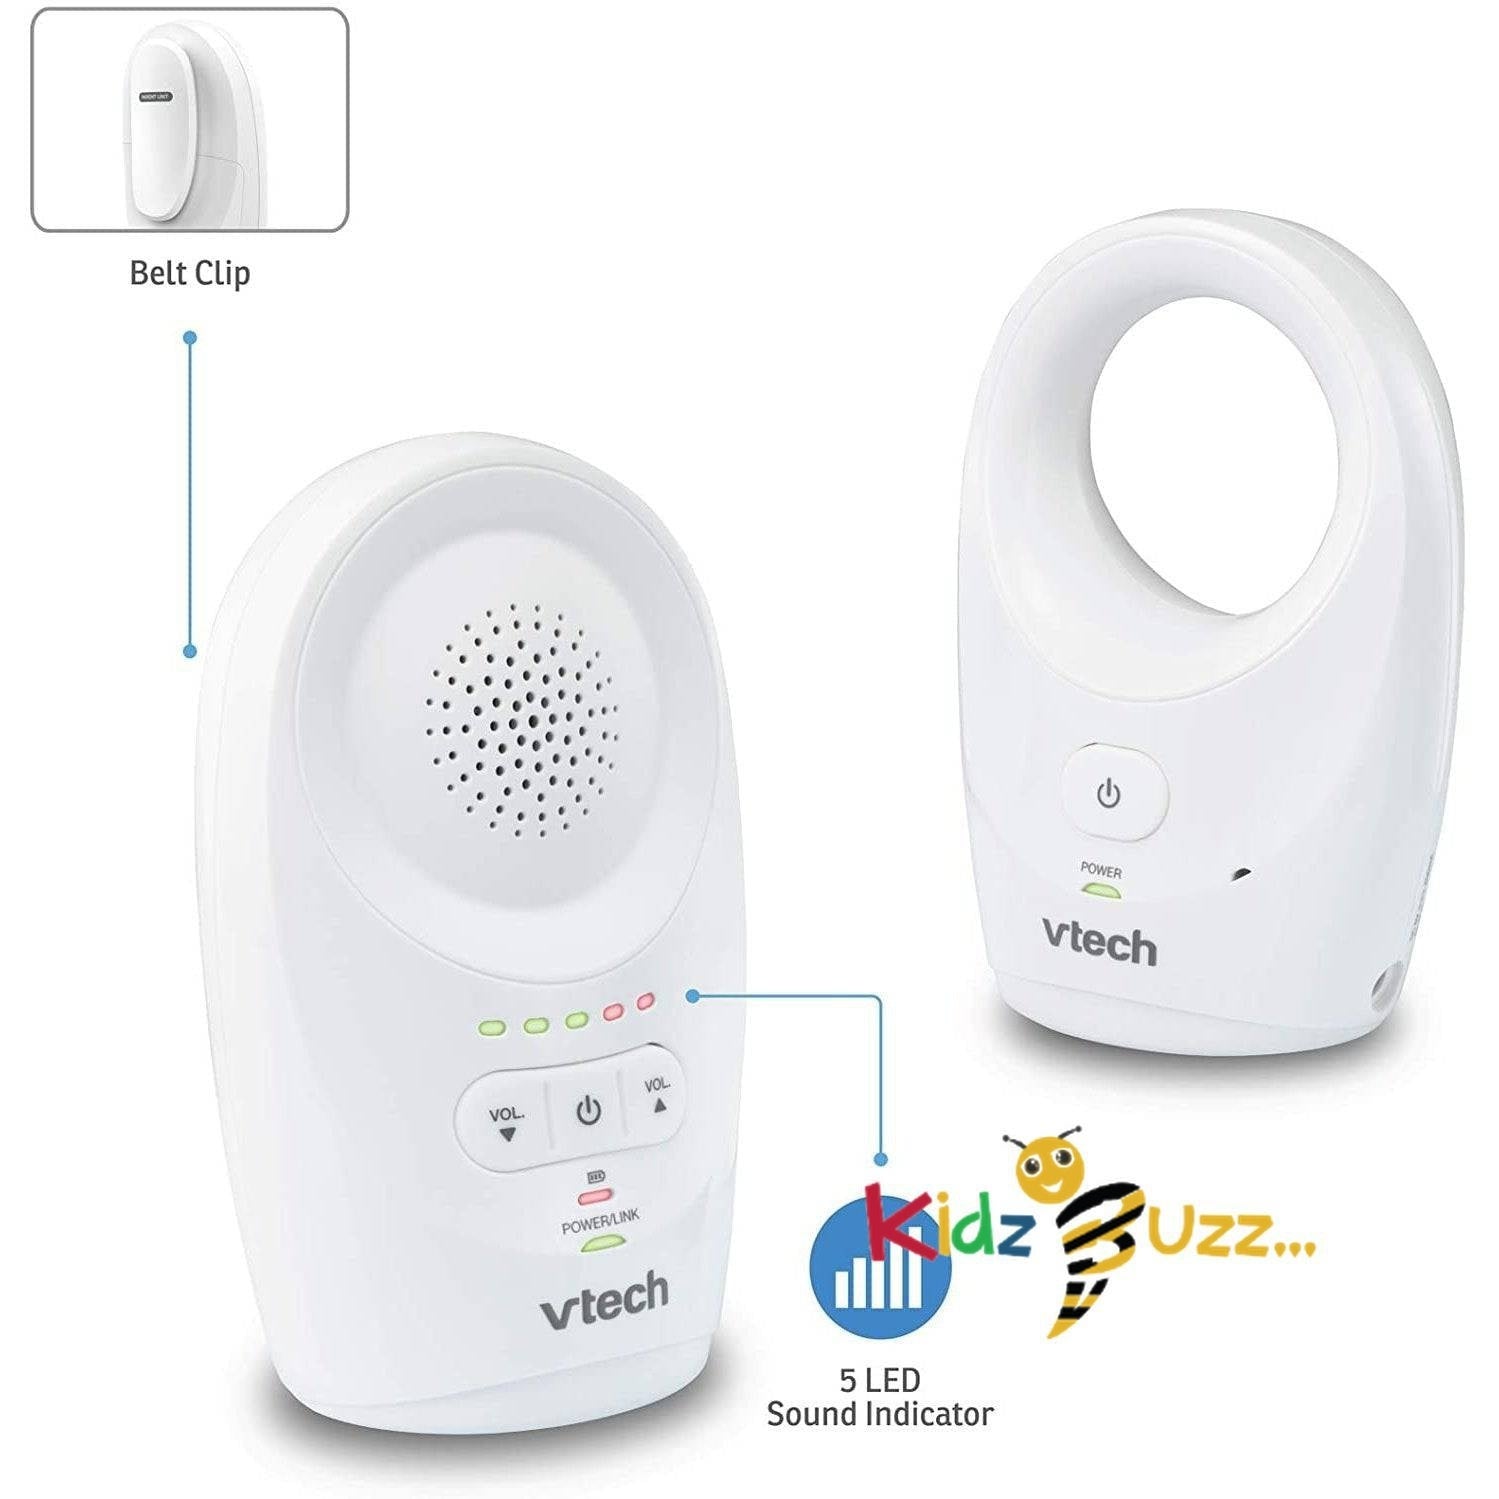 Vtech Baby Phone